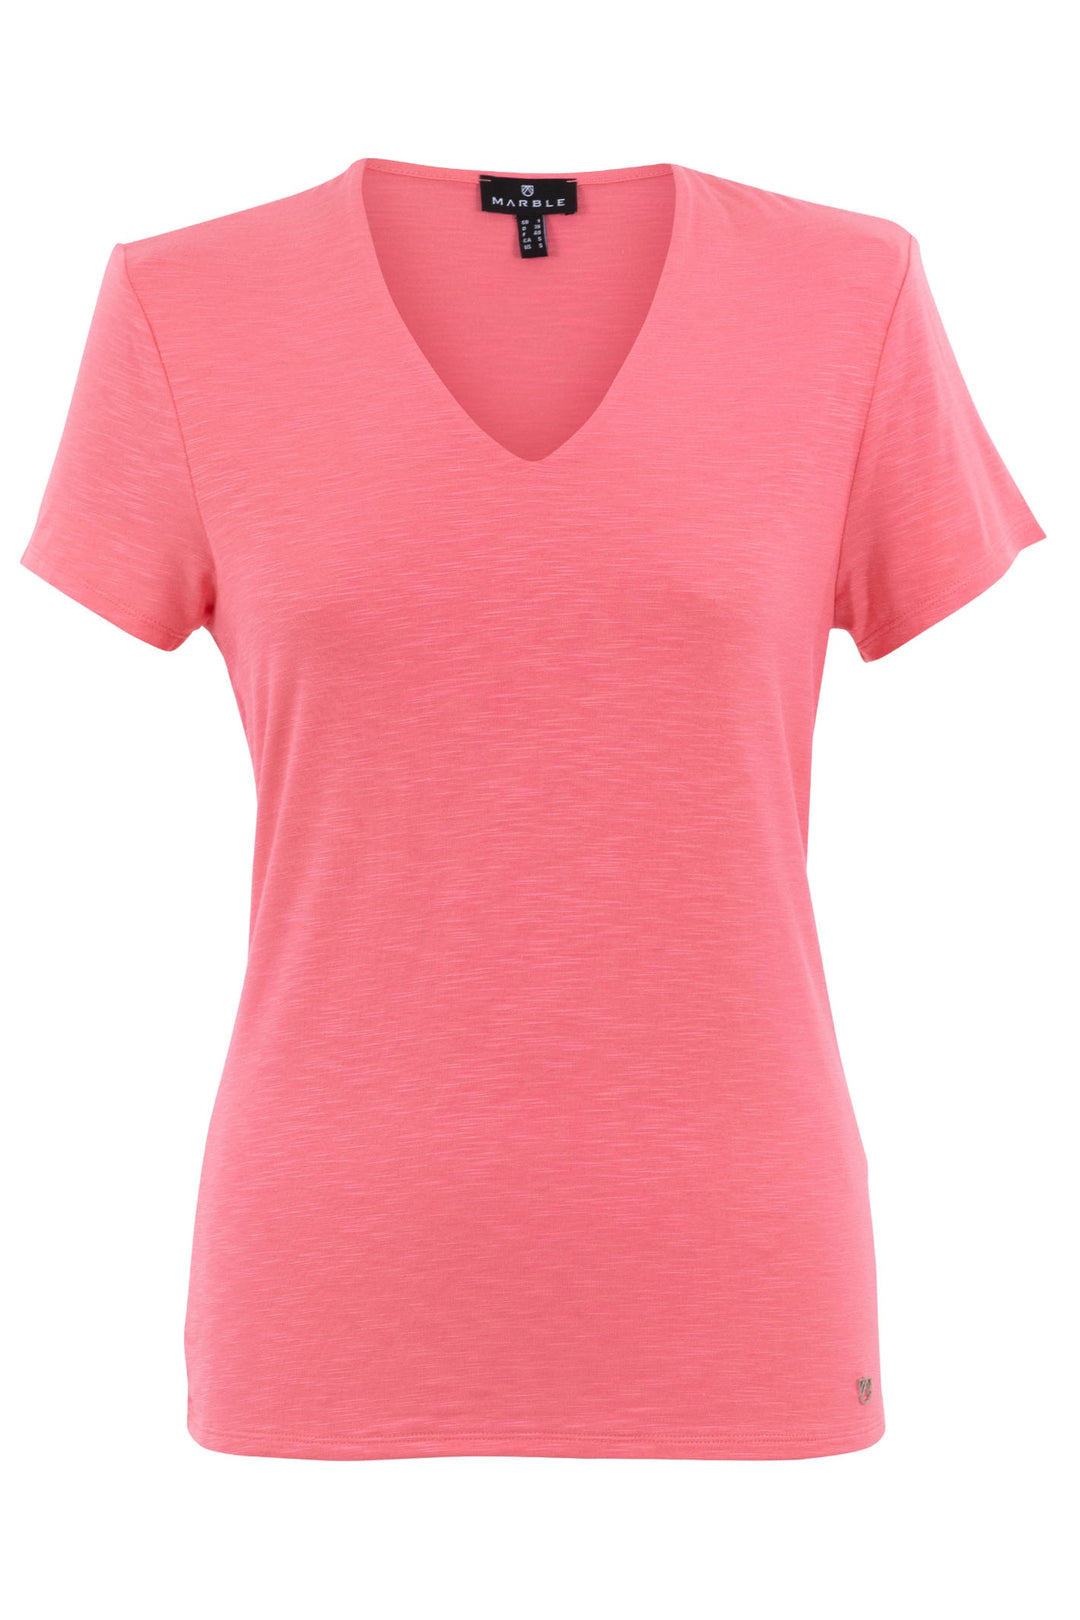 Marble 6539 135 Pink V-Neck T-Shirt Top